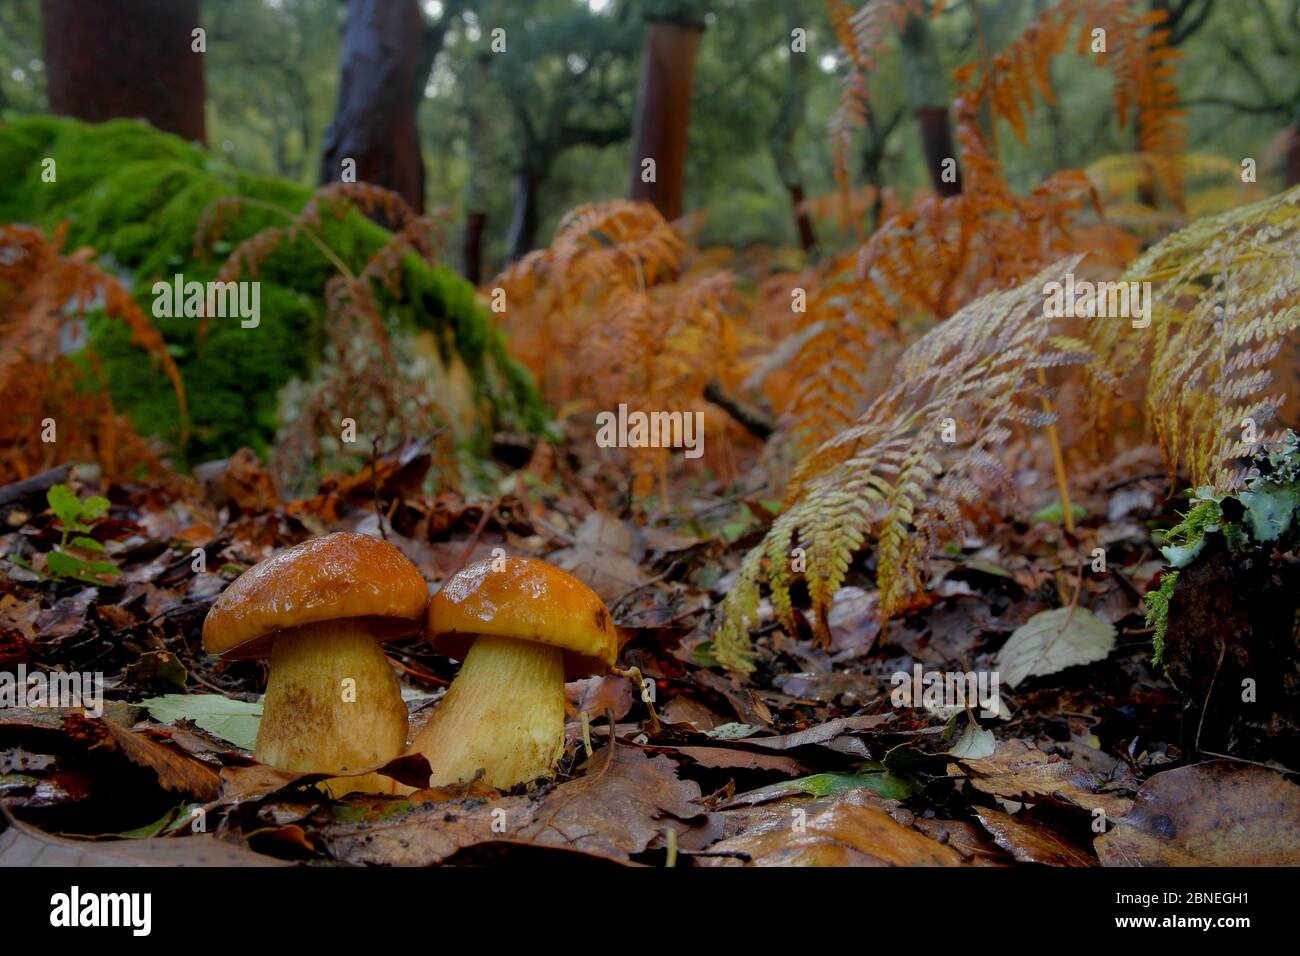 Penny bun / fungo di Cep (Boletus edulis) Los Alcornocales Parco Naturale, Cortes de la Frontera, Spagna meridionale, novembre. Foto Stock